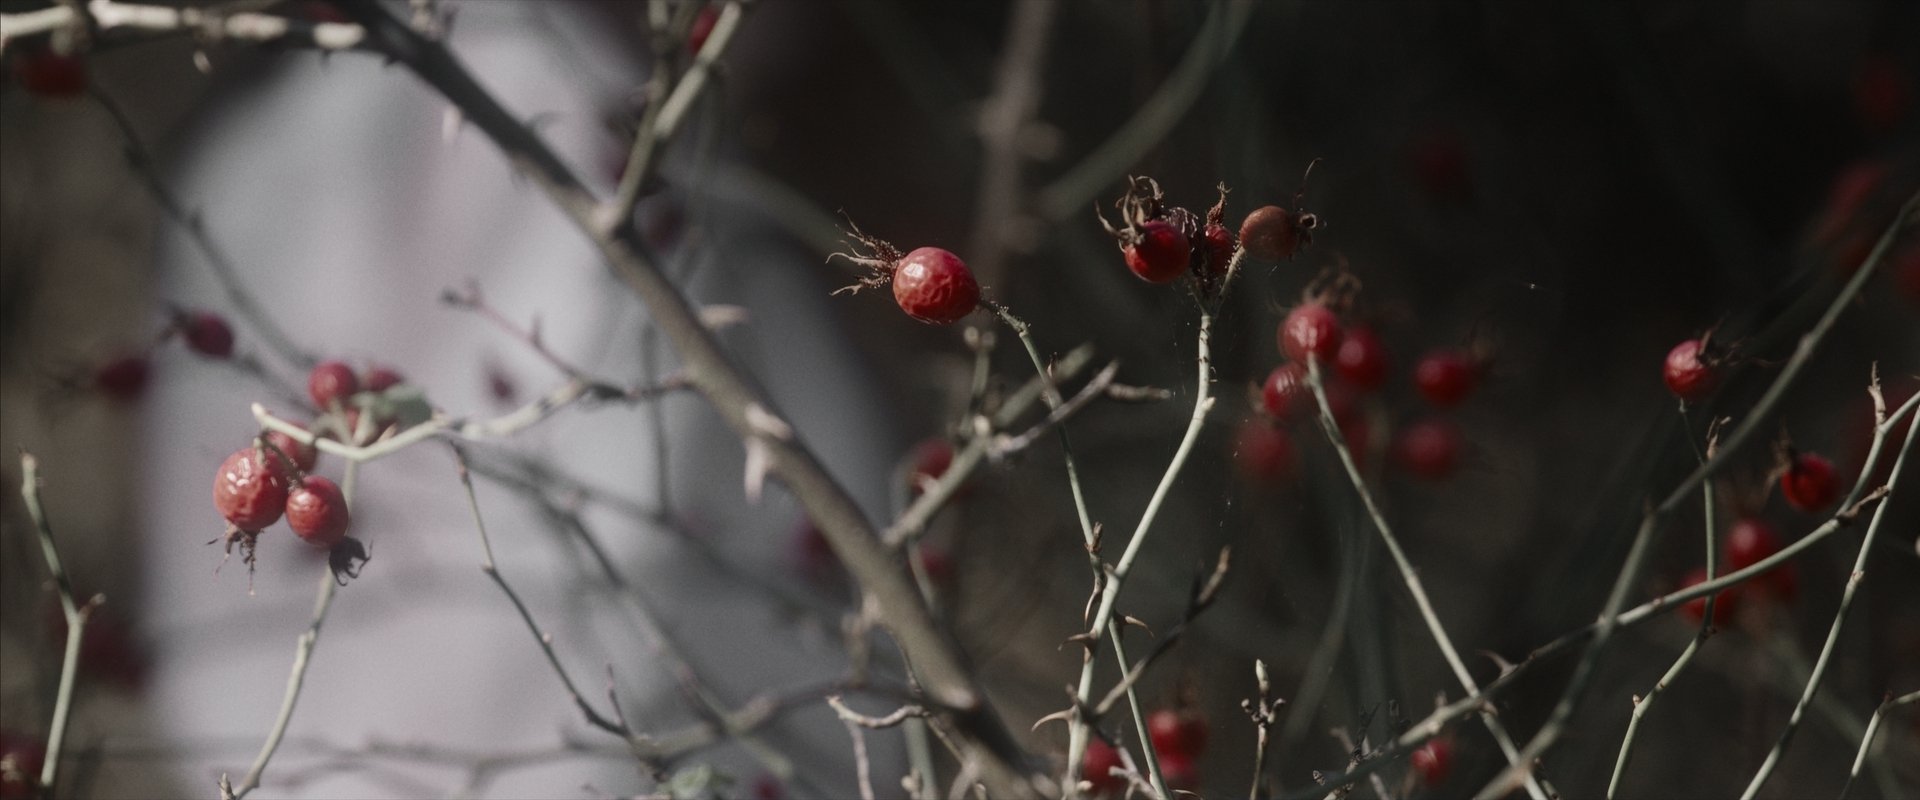 Raspberry Vine stills_1.41.1.jpg